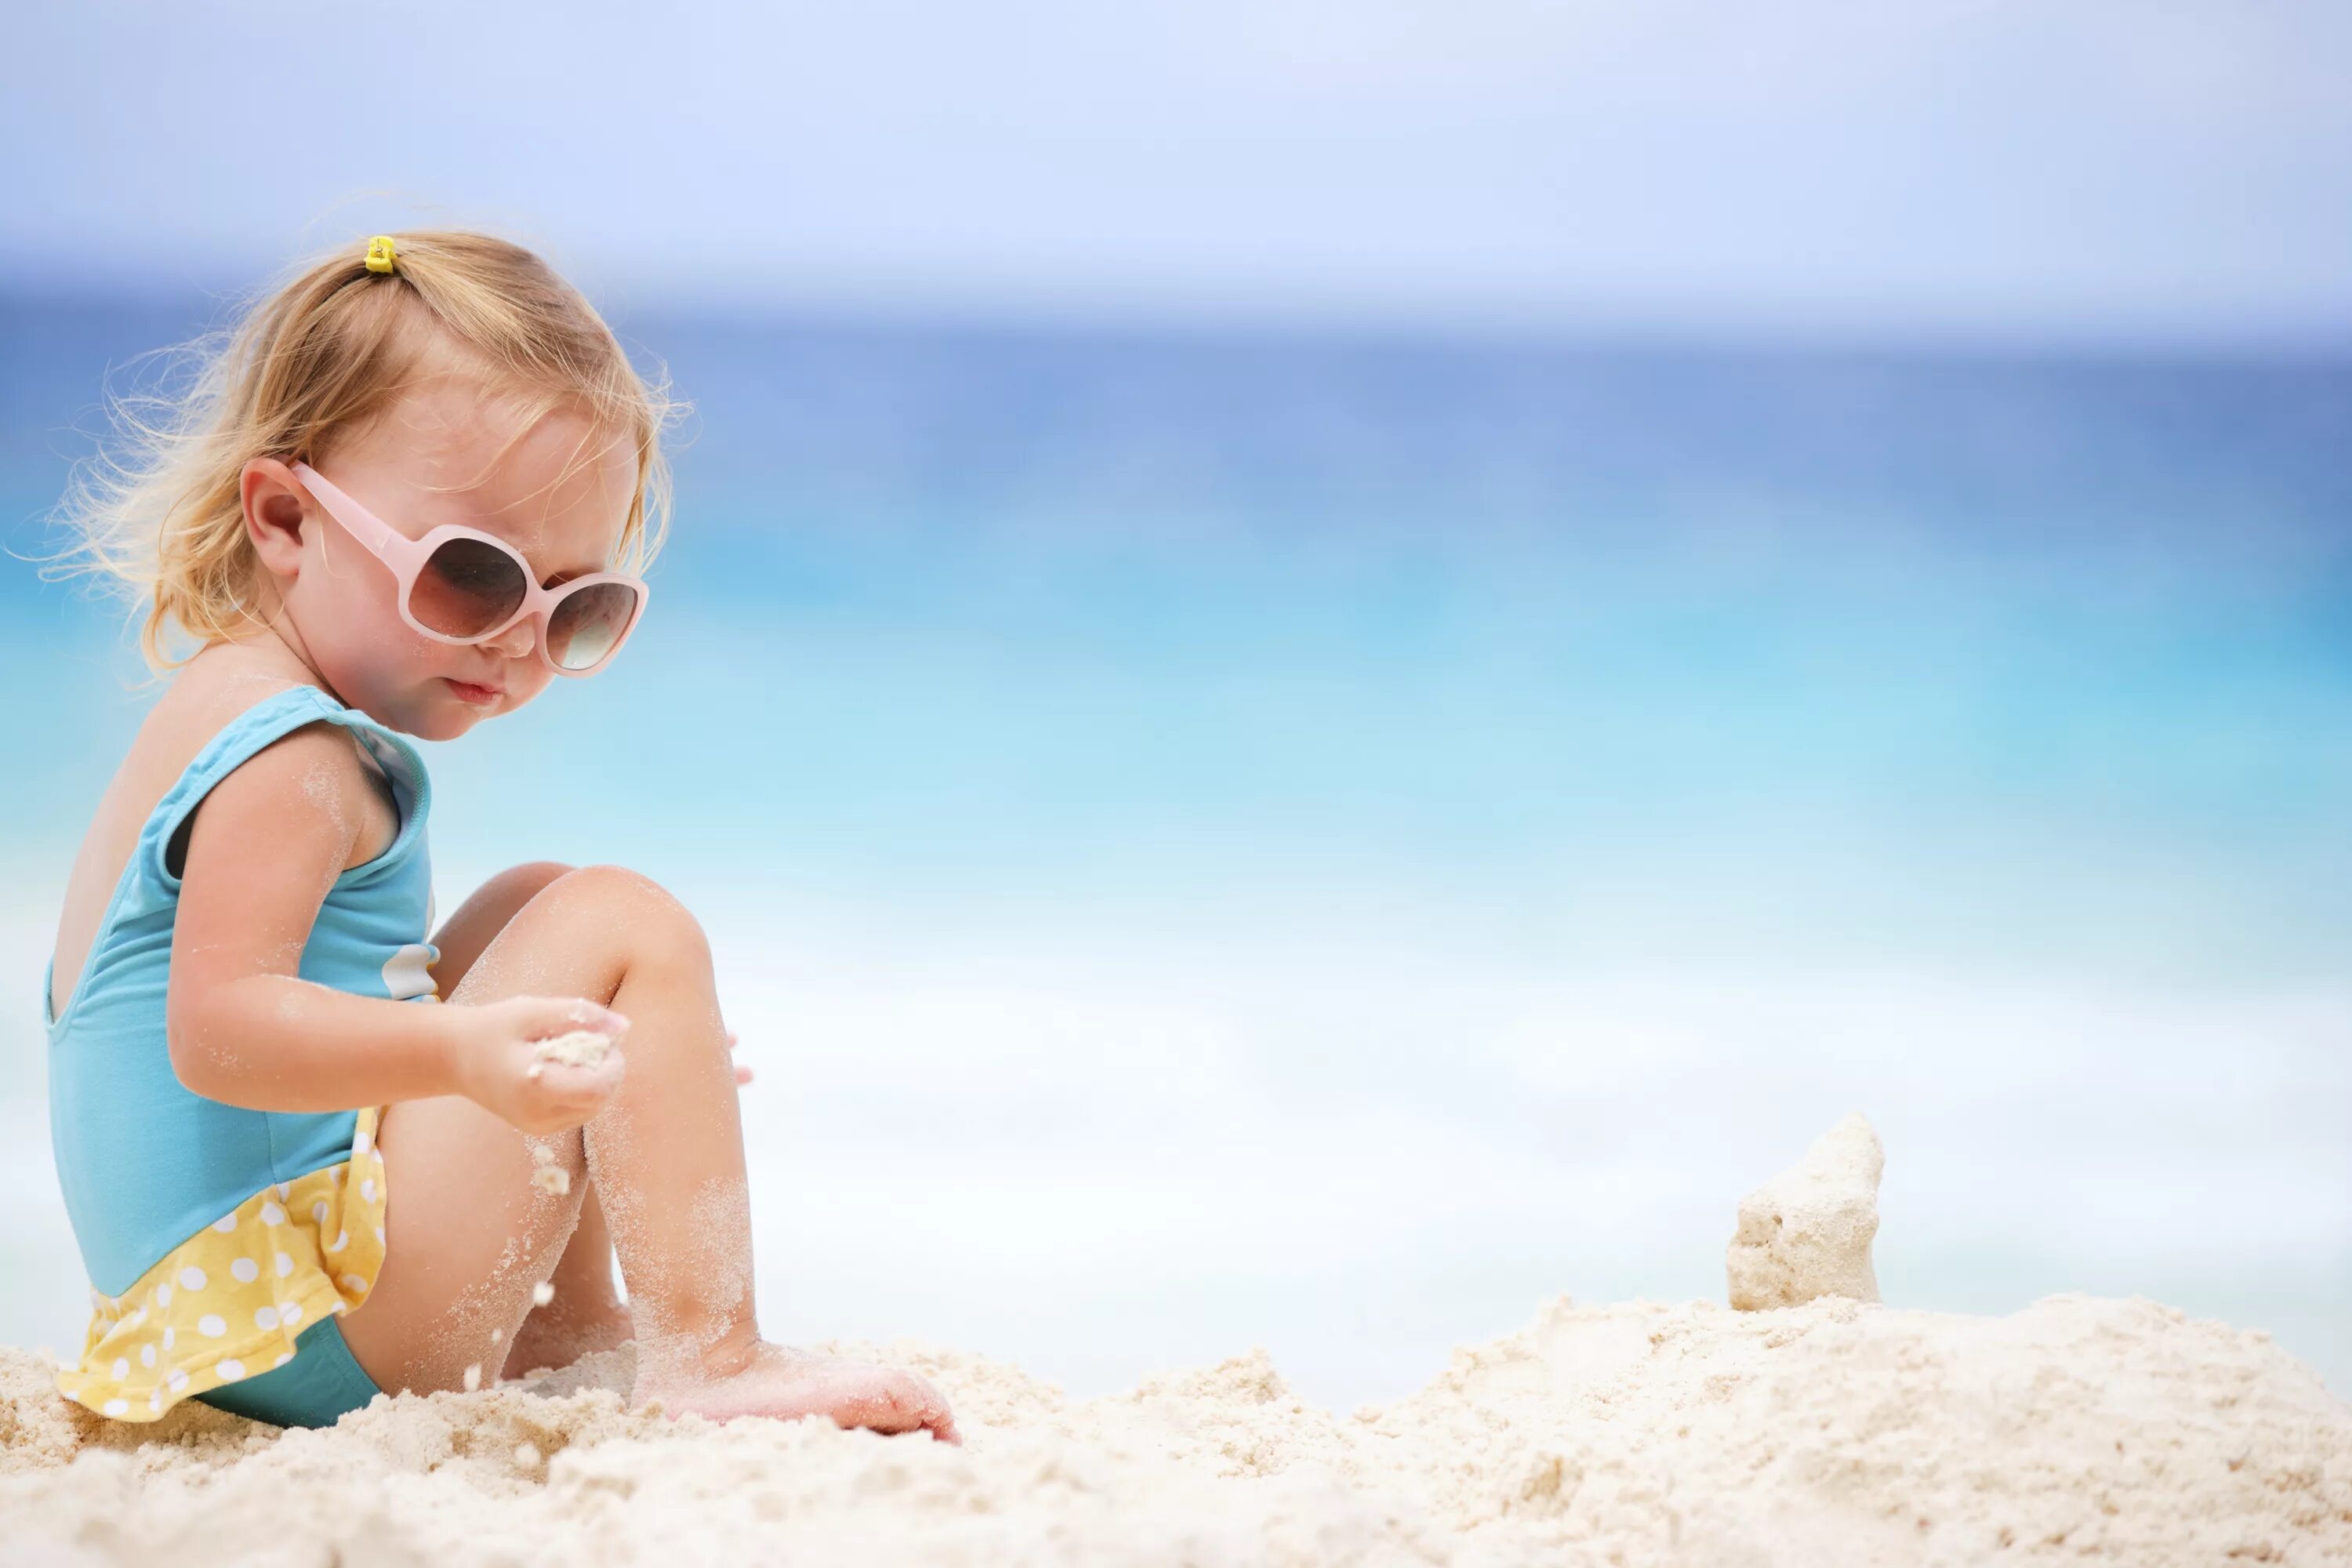 Море песок ребенок. Ребенок в пледе. Лето дети море. Дети на море девочки. Лето пляж дети.